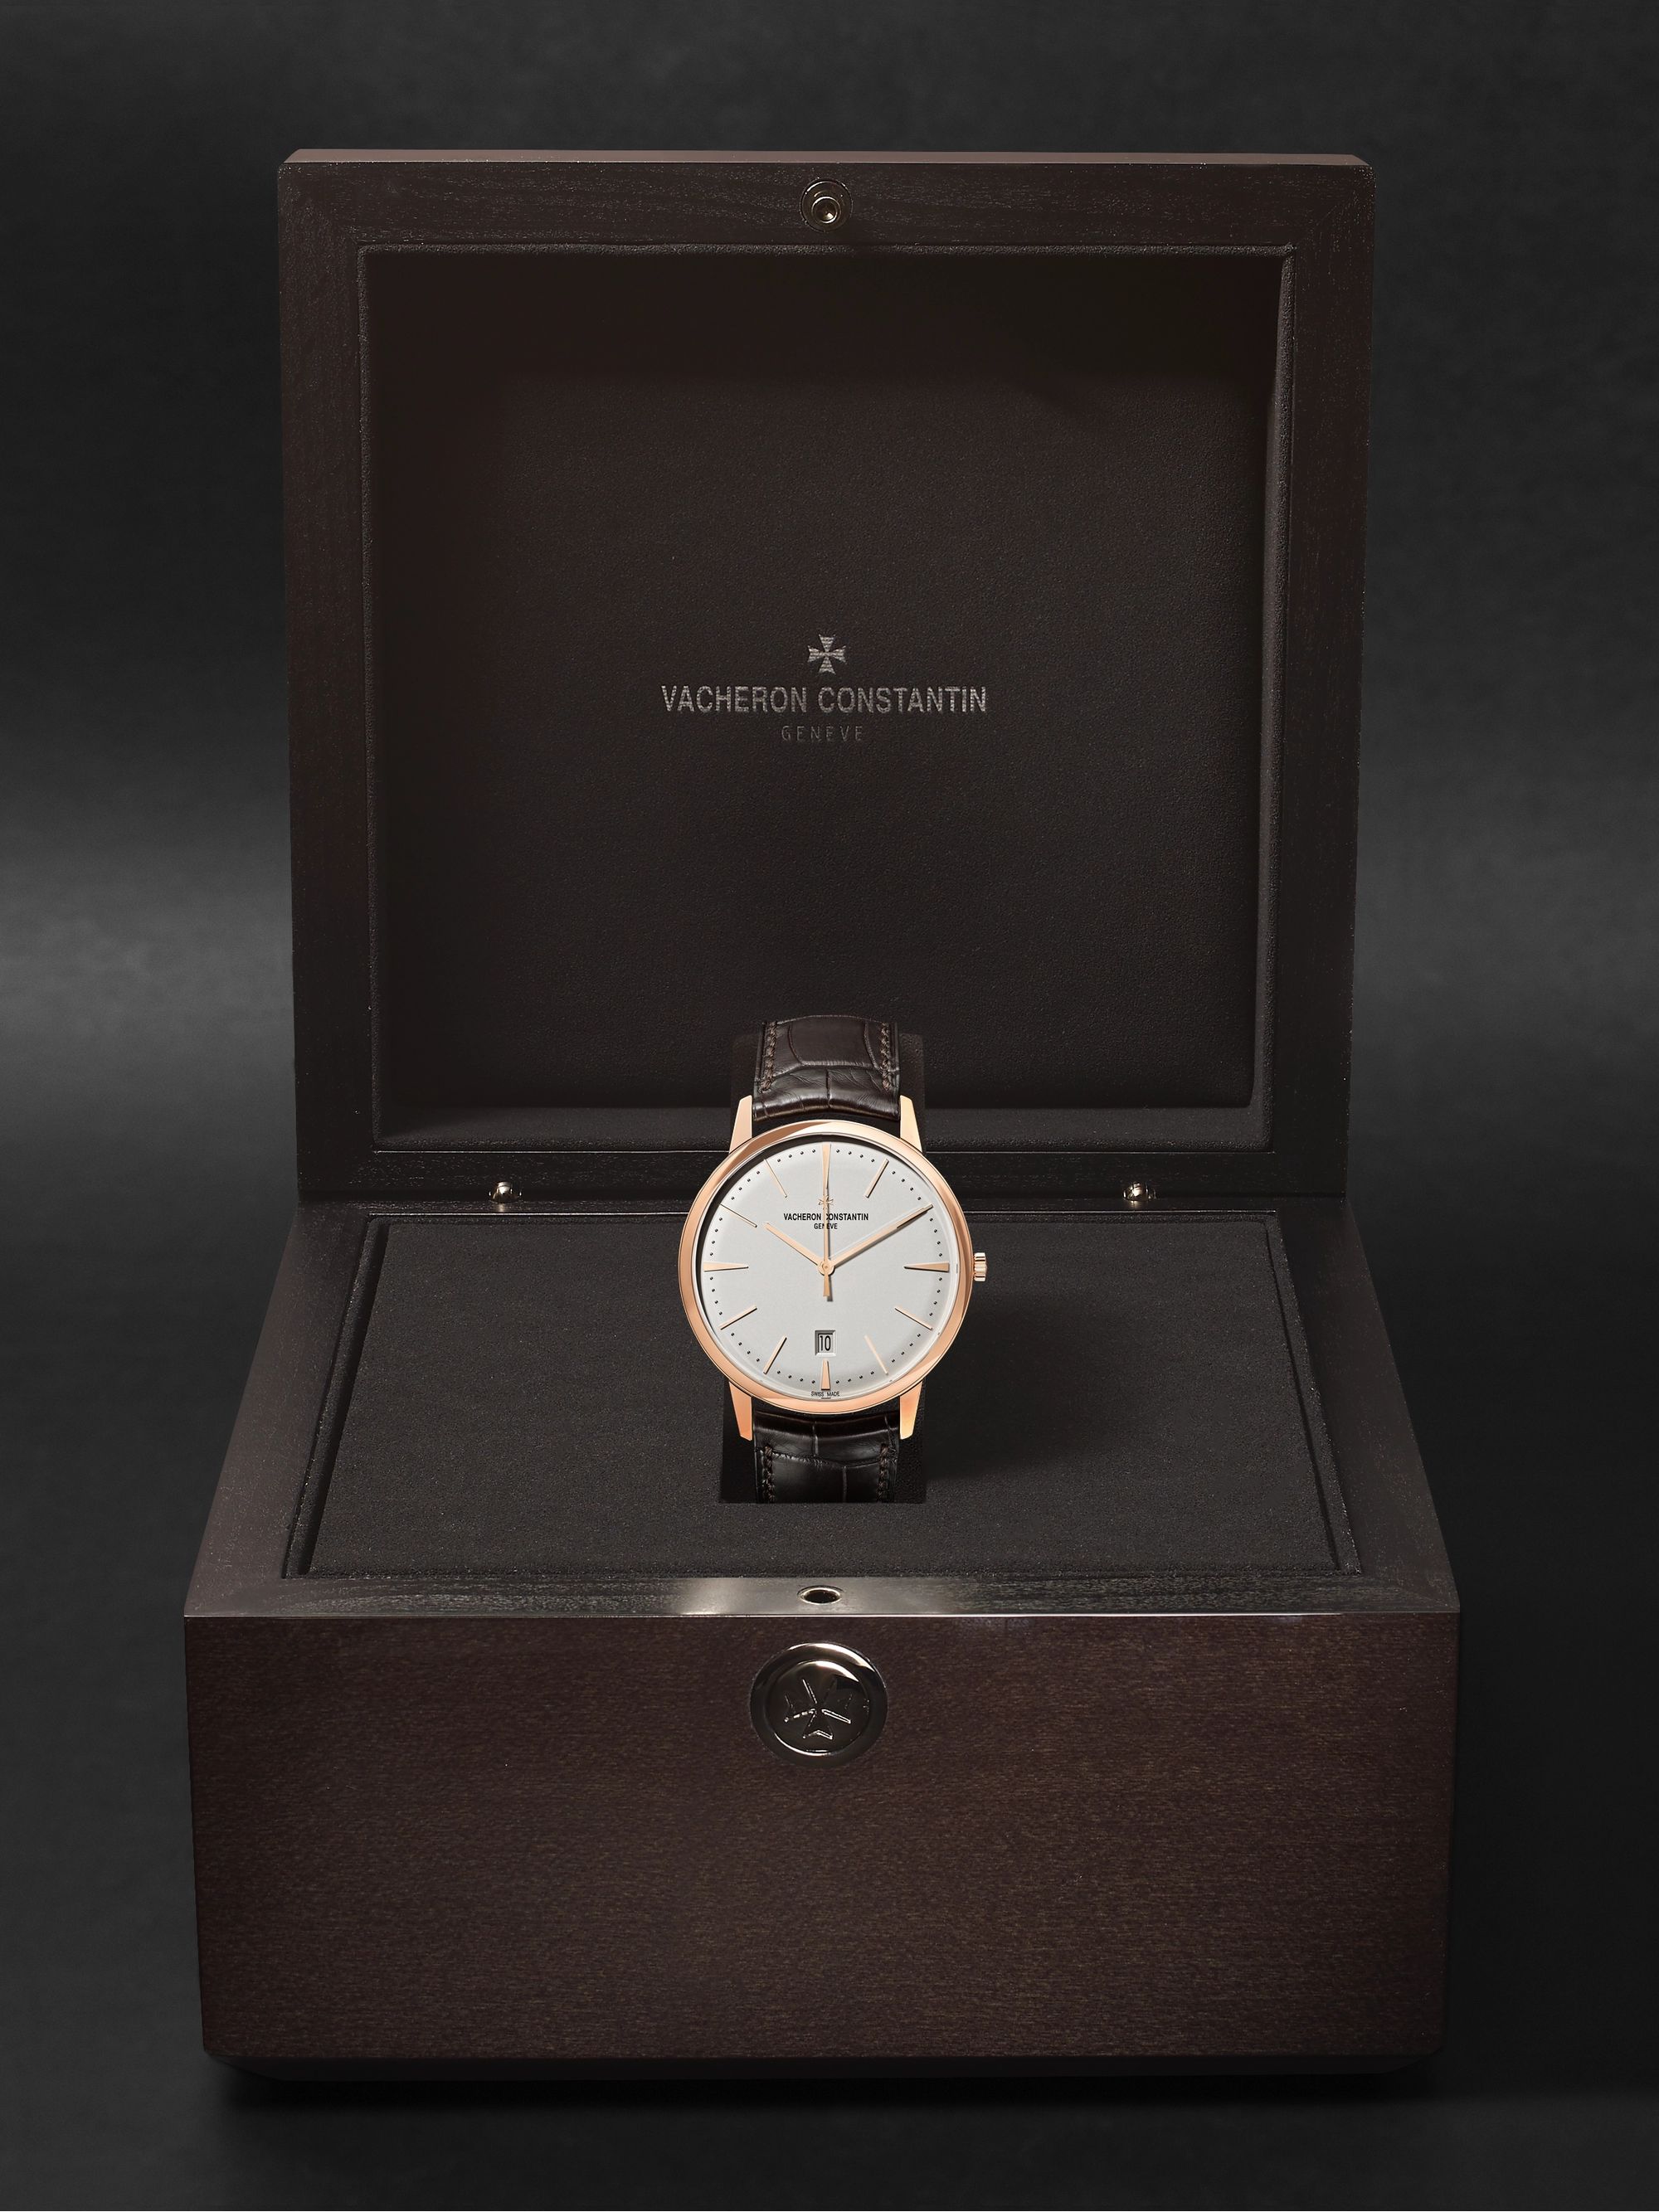 VACHERON CONSTANTIN Patrimony Automatic 40mm 18-Karat Pink Gold and Alligator Watch, Ref. No. 85180/000R-9248